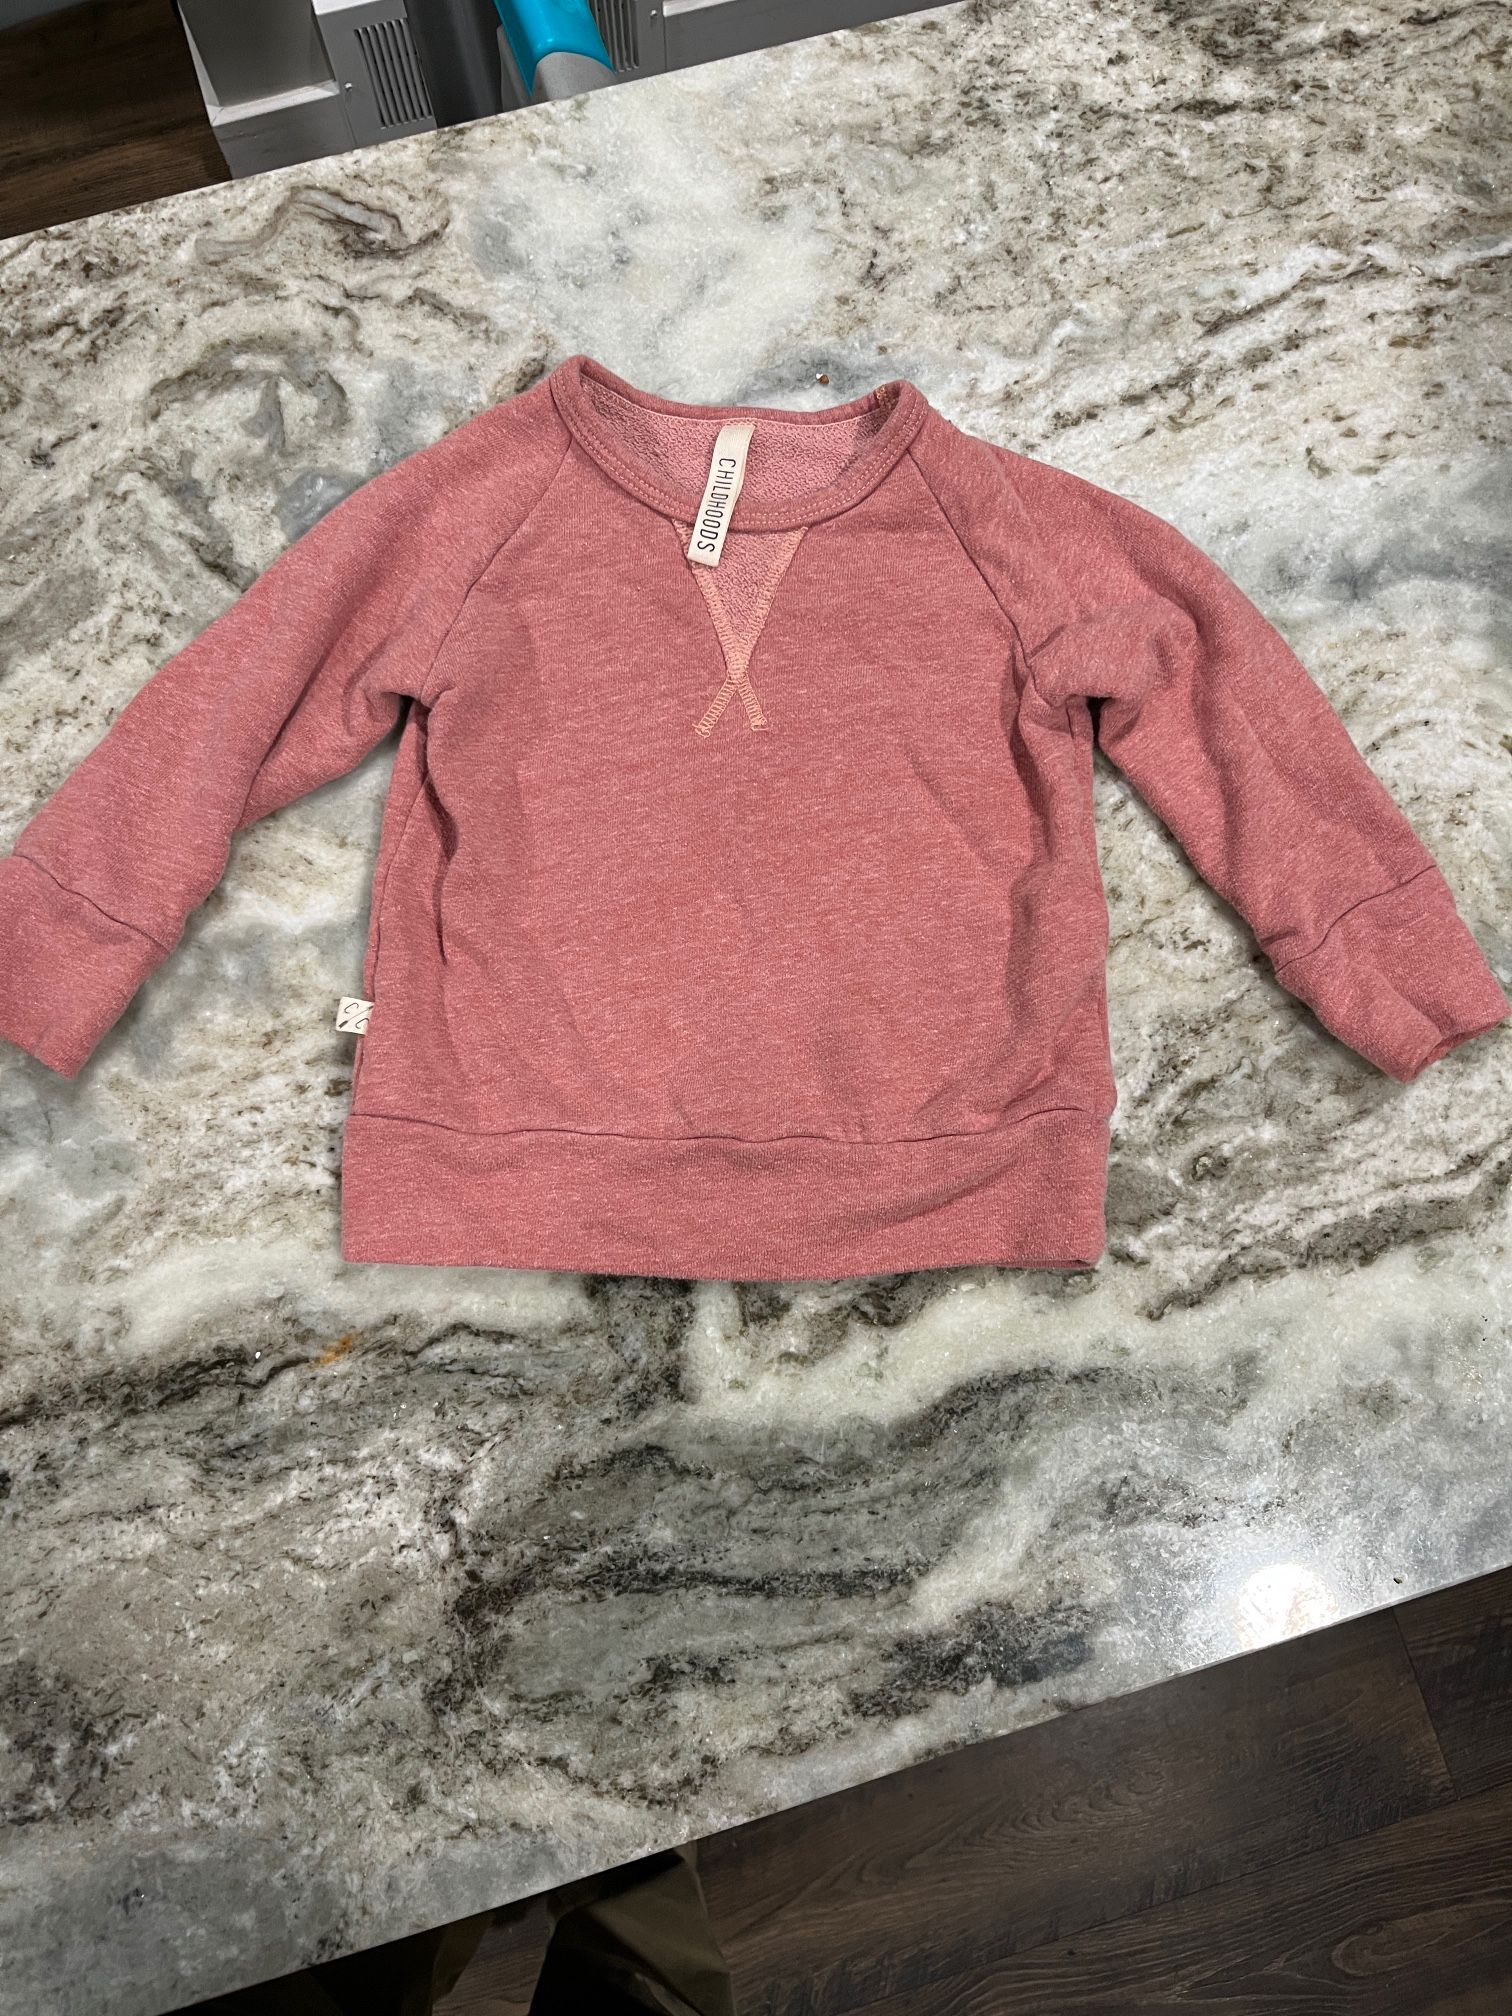 Childhoods Clothing 2T Sweatshirt (Peachy/Pink)